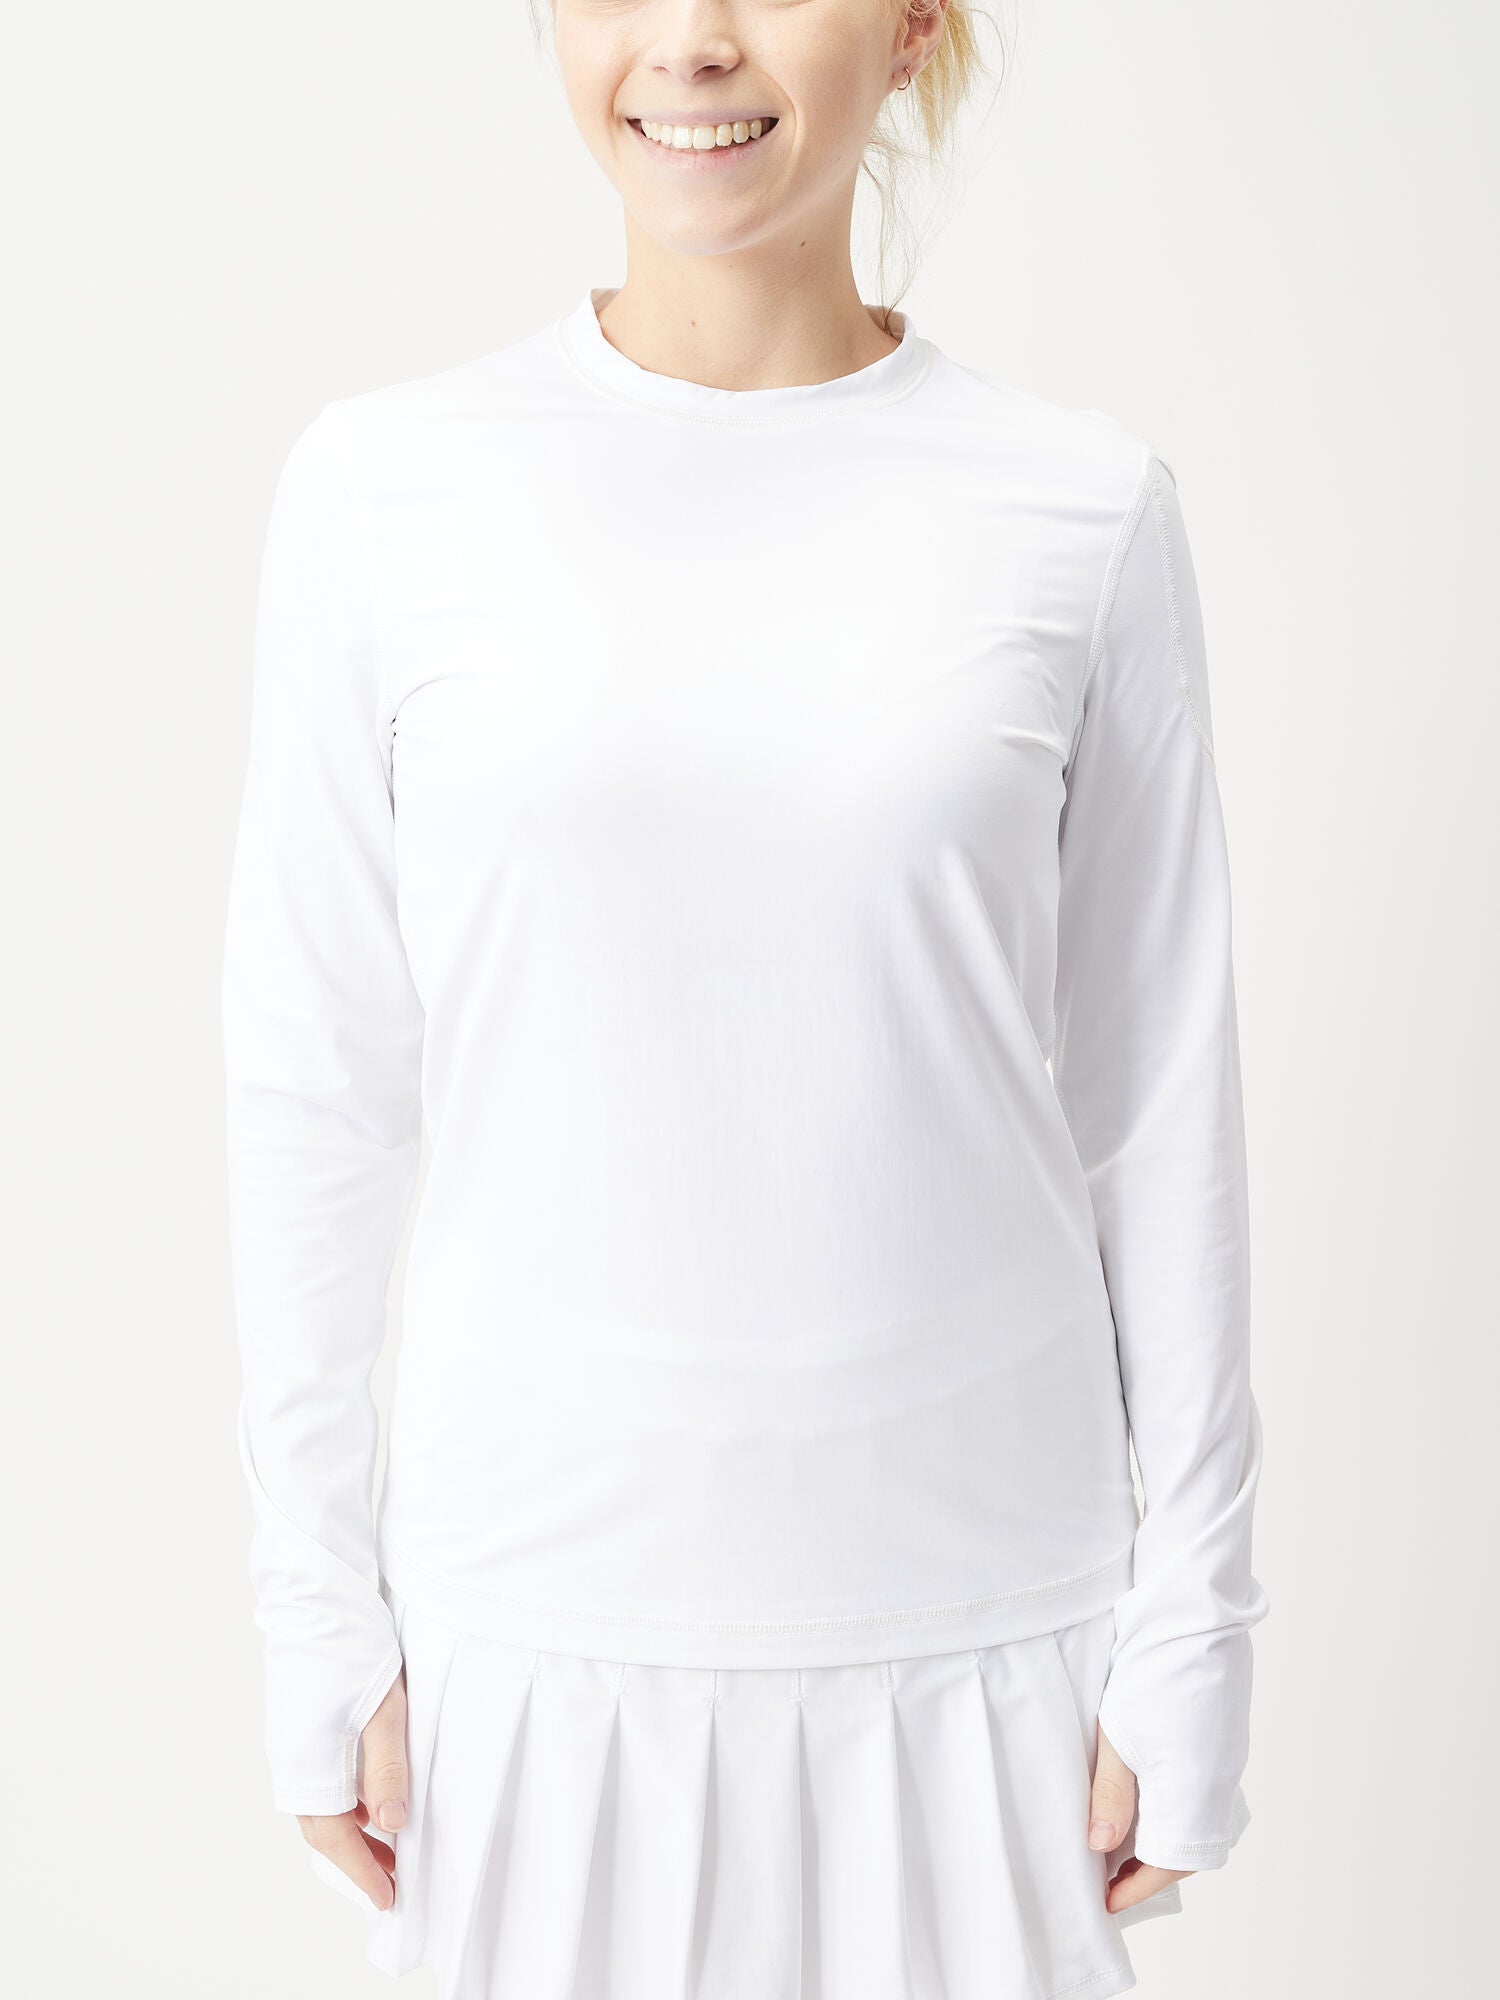 Bollé Womens Essential 3/4 Sleeve Tennis Top White Small 